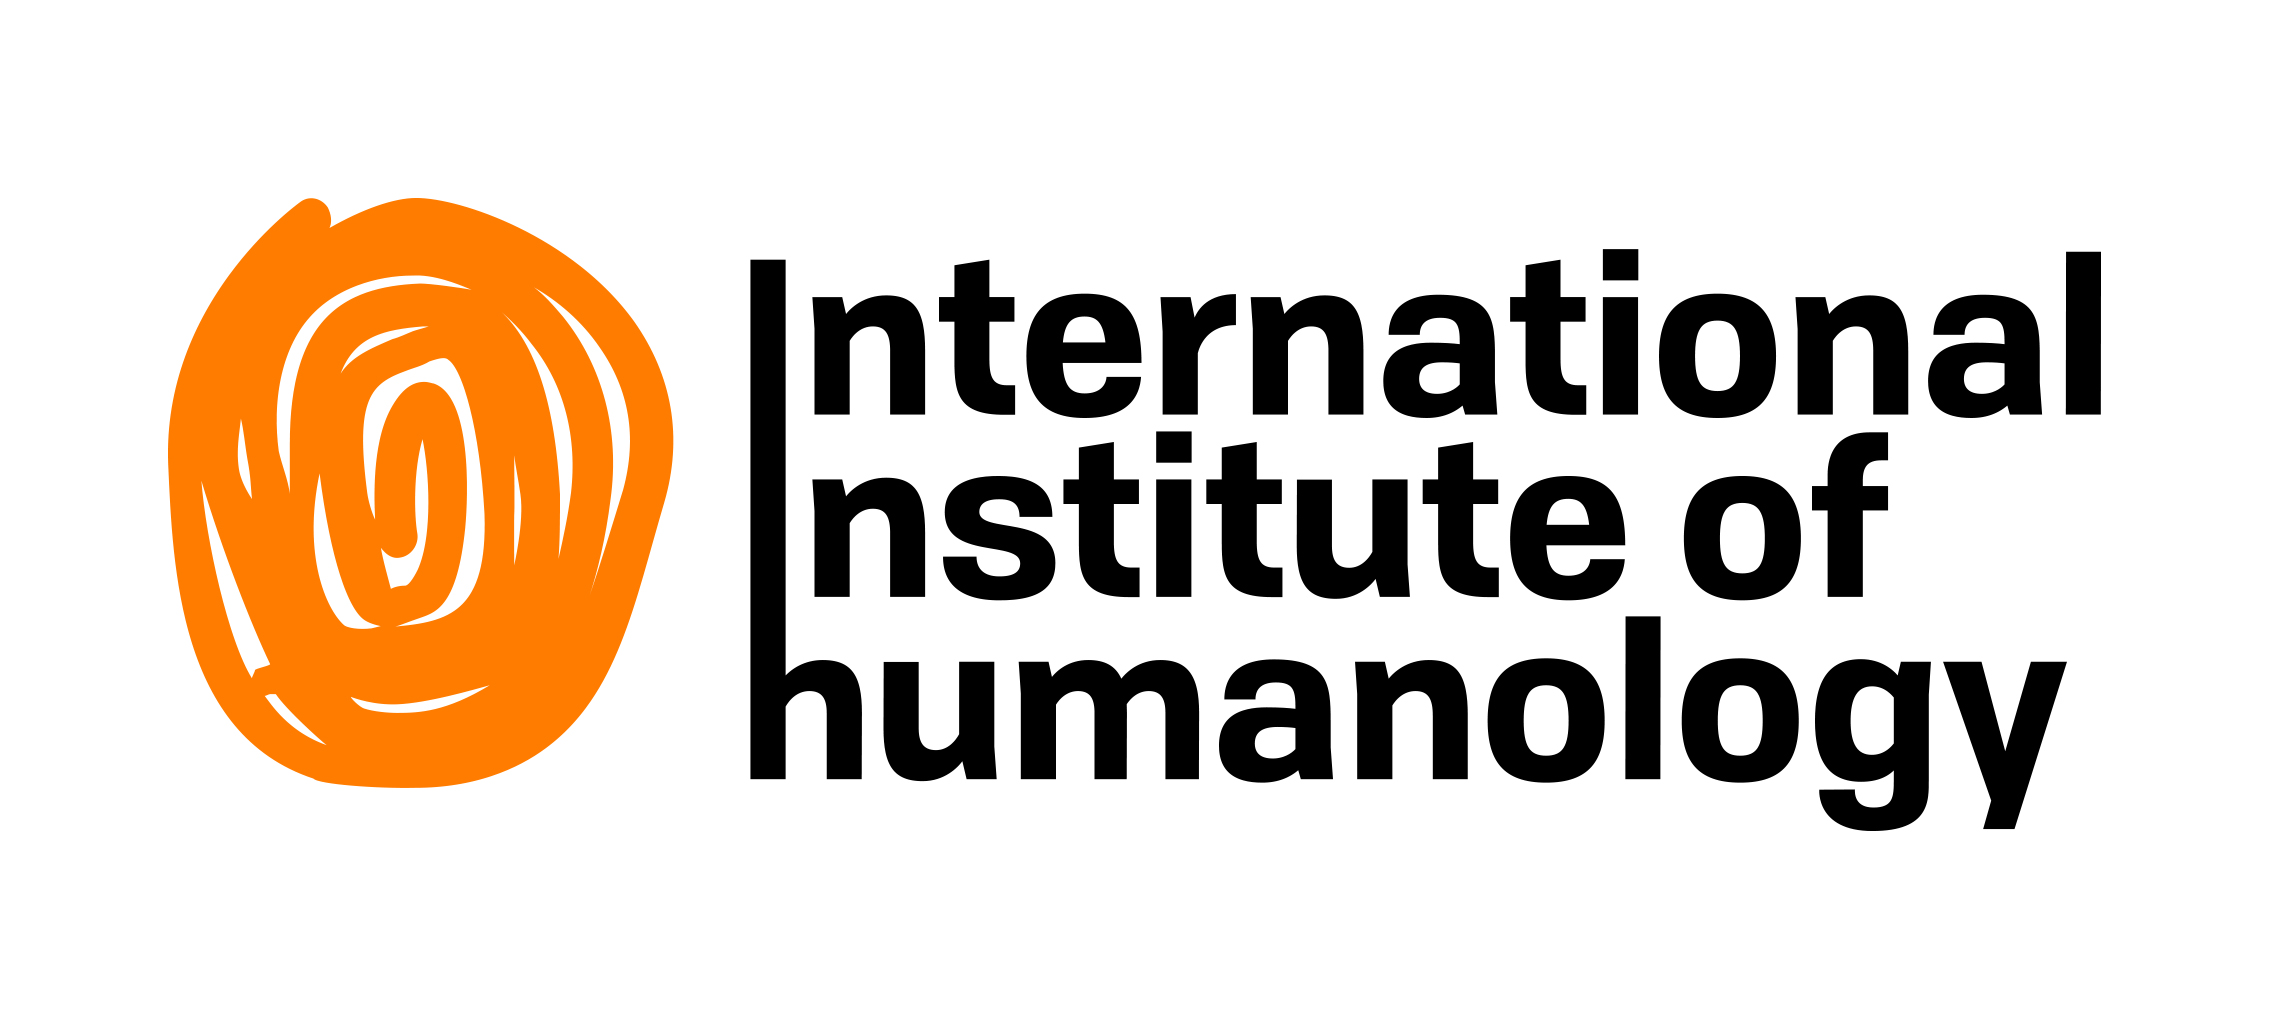 INTERNATIONAL INSTITUTE OF HUMANOLOGY